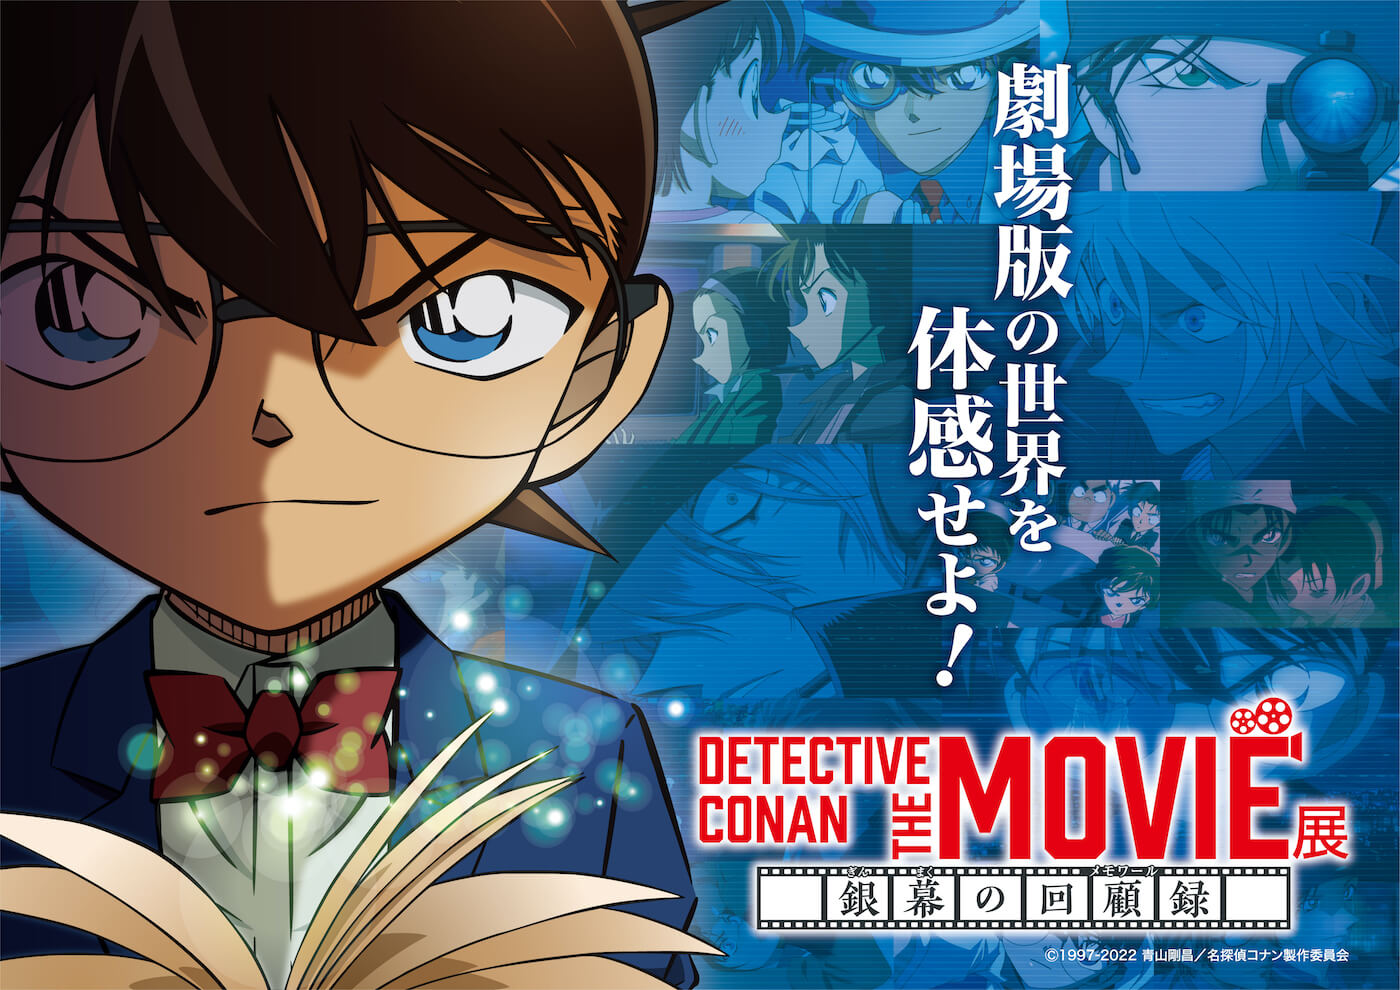 Detective Conan The Movie Exhibition | Fukuoka Now